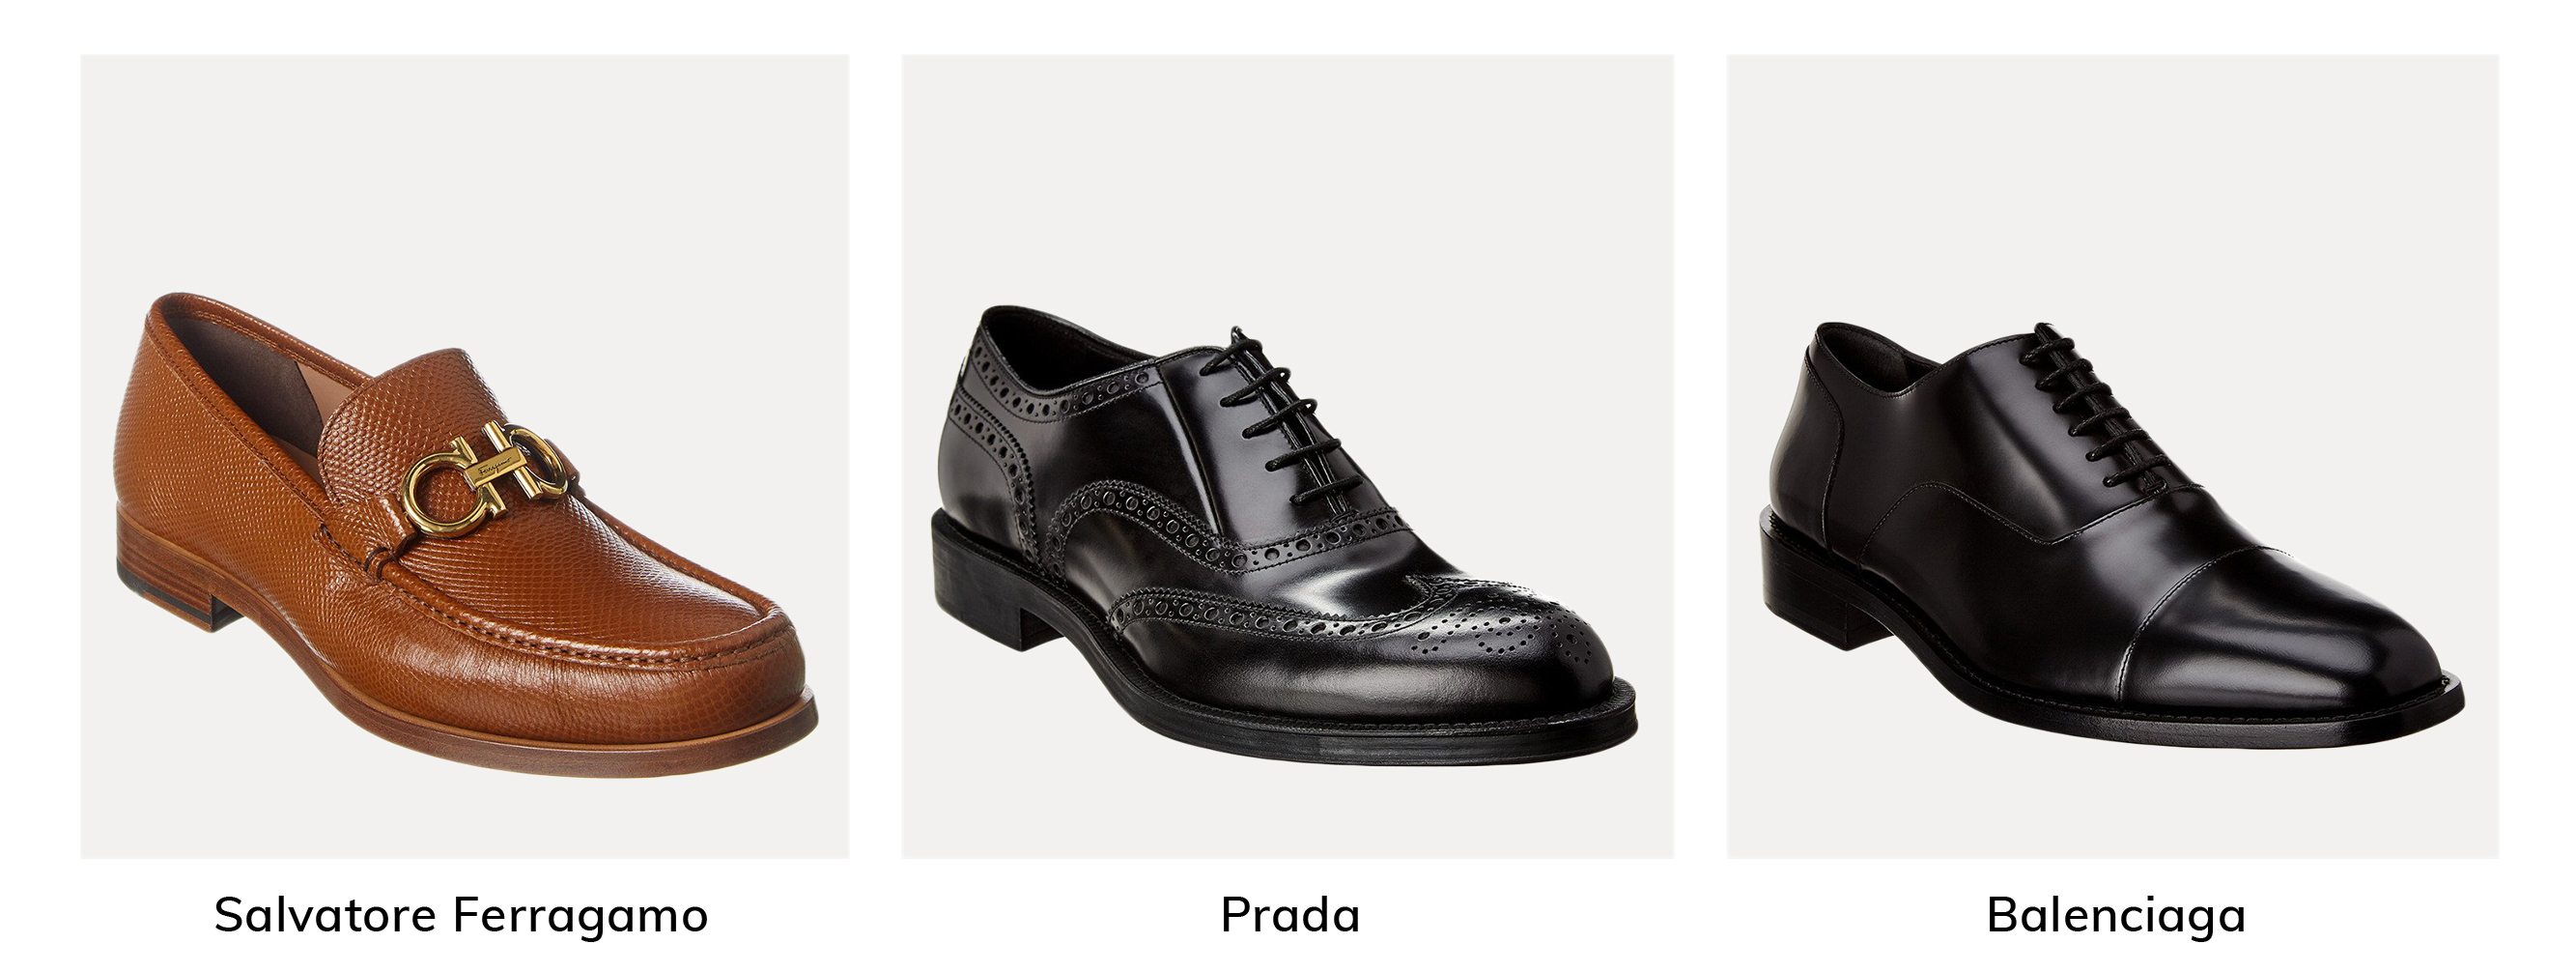 Shop Ferragamo, Prada and Balenciaga Shoes on Sale